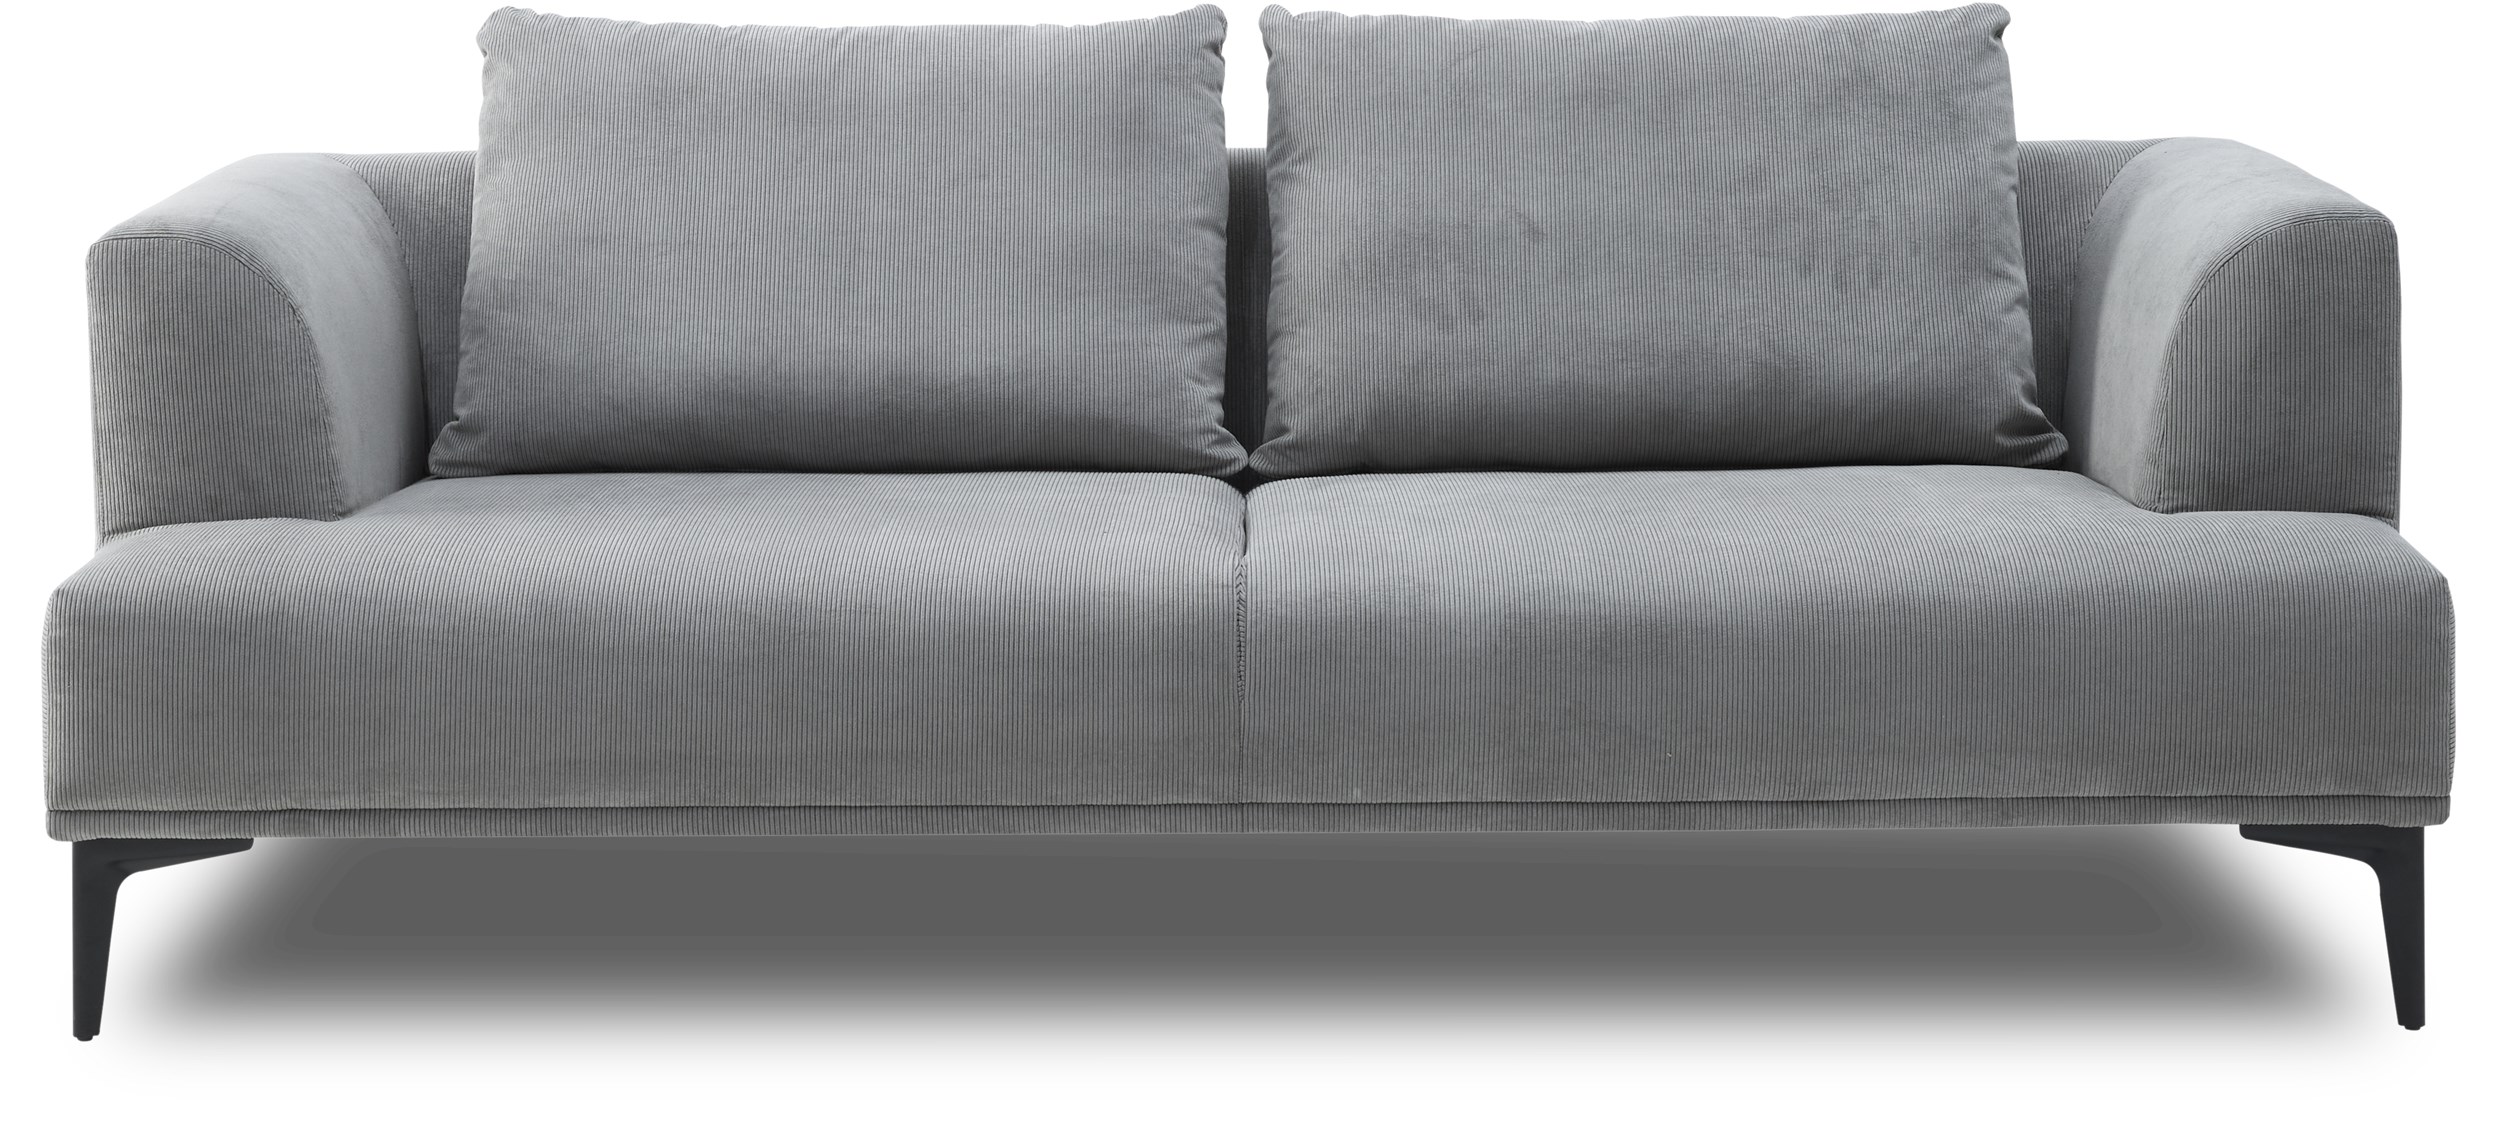 Reggio 2½ pers. Sofa - Jump 1958 Grey stof og ben i sort metal